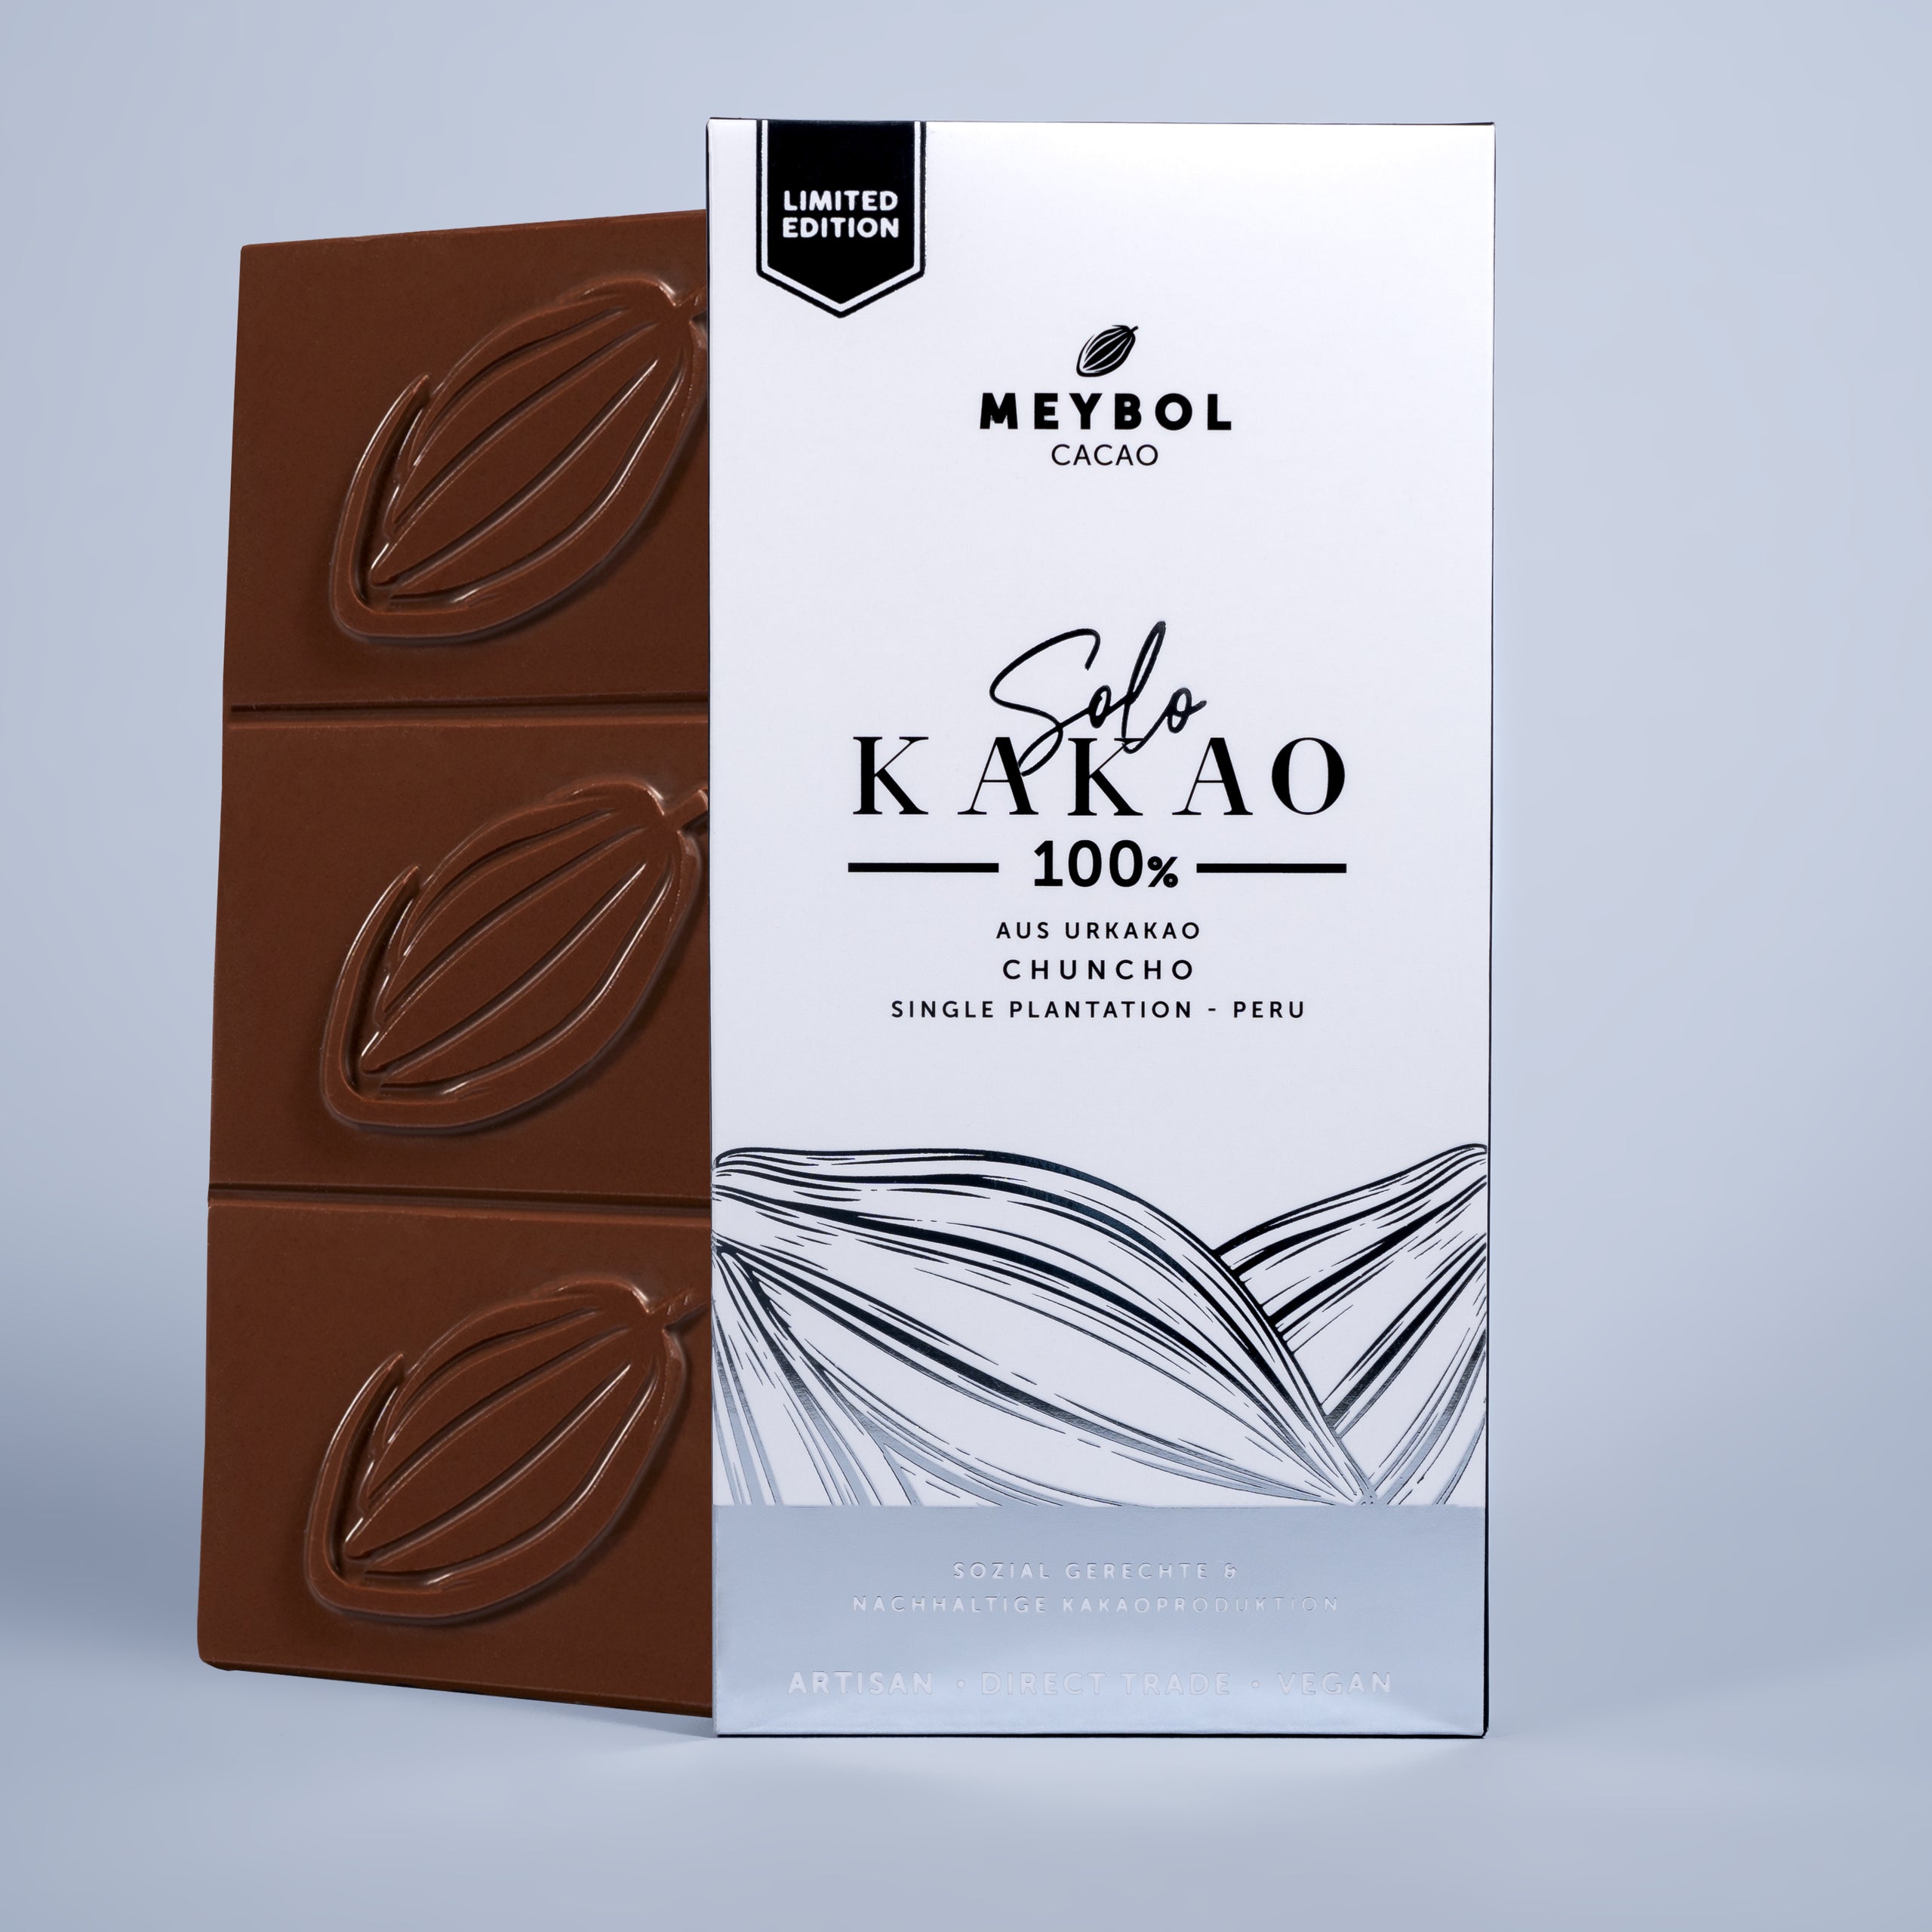 Sugar-free Dark Chocolate Meybol Cacao - Solo Kakao 100%